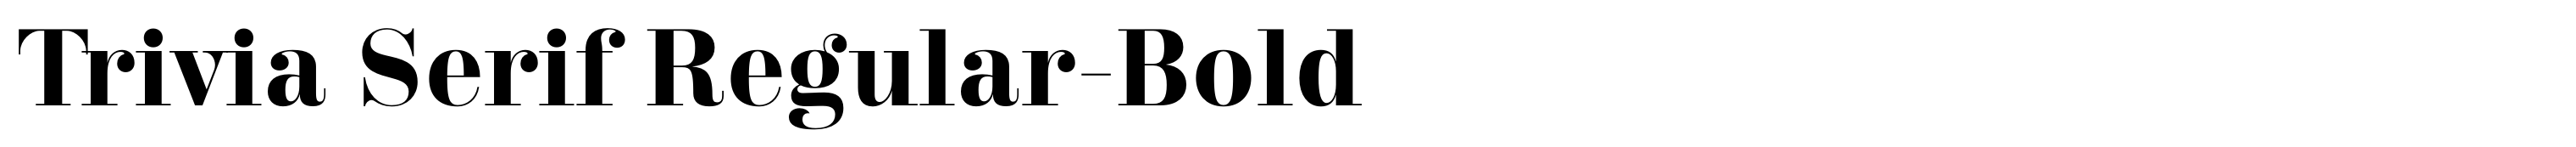 Trivia Serif Regular-Bold